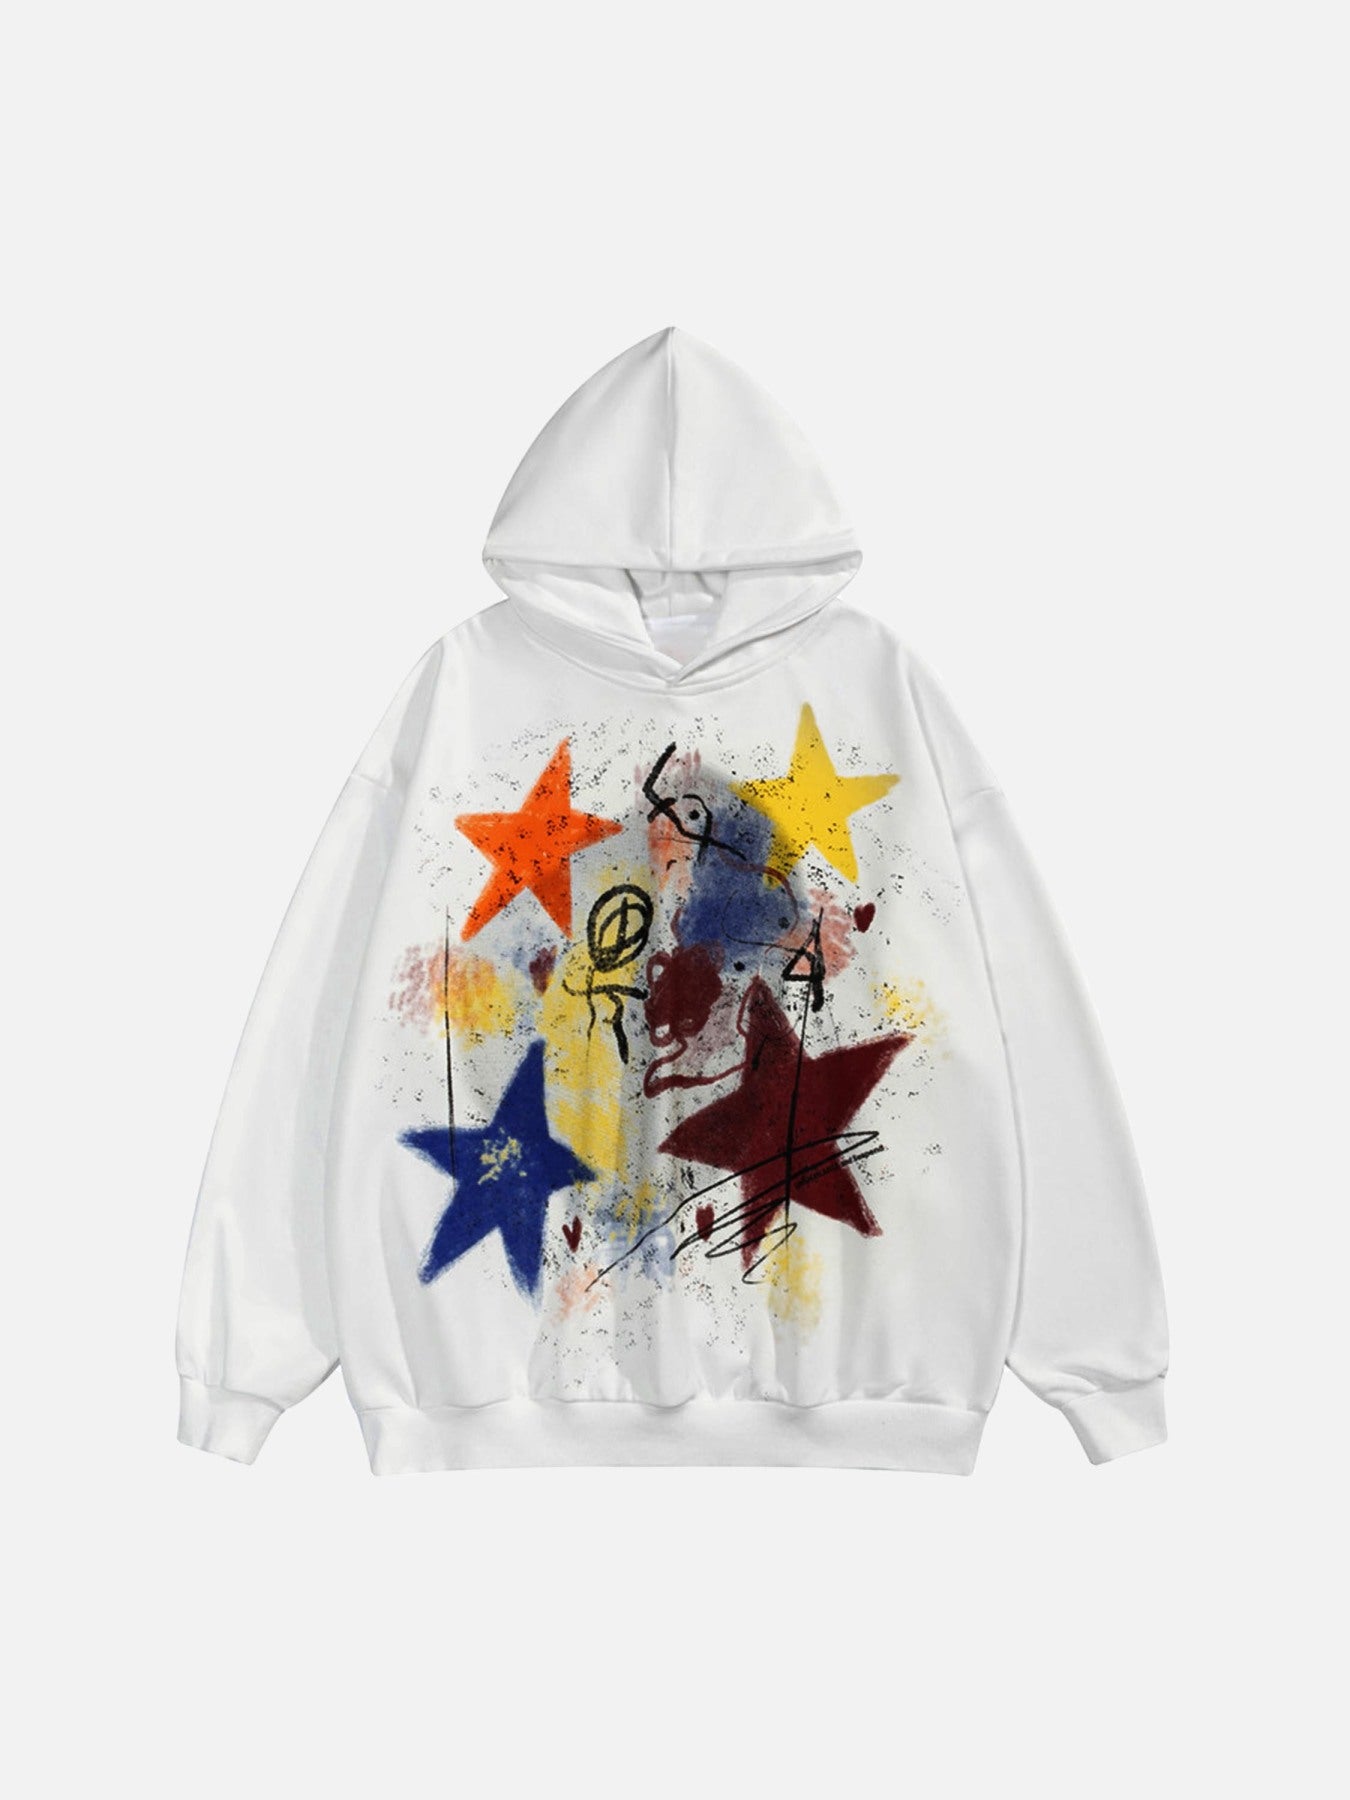 The Supermade Pentagram Graffiti Ink Splash Print Hooded Sweatshirt